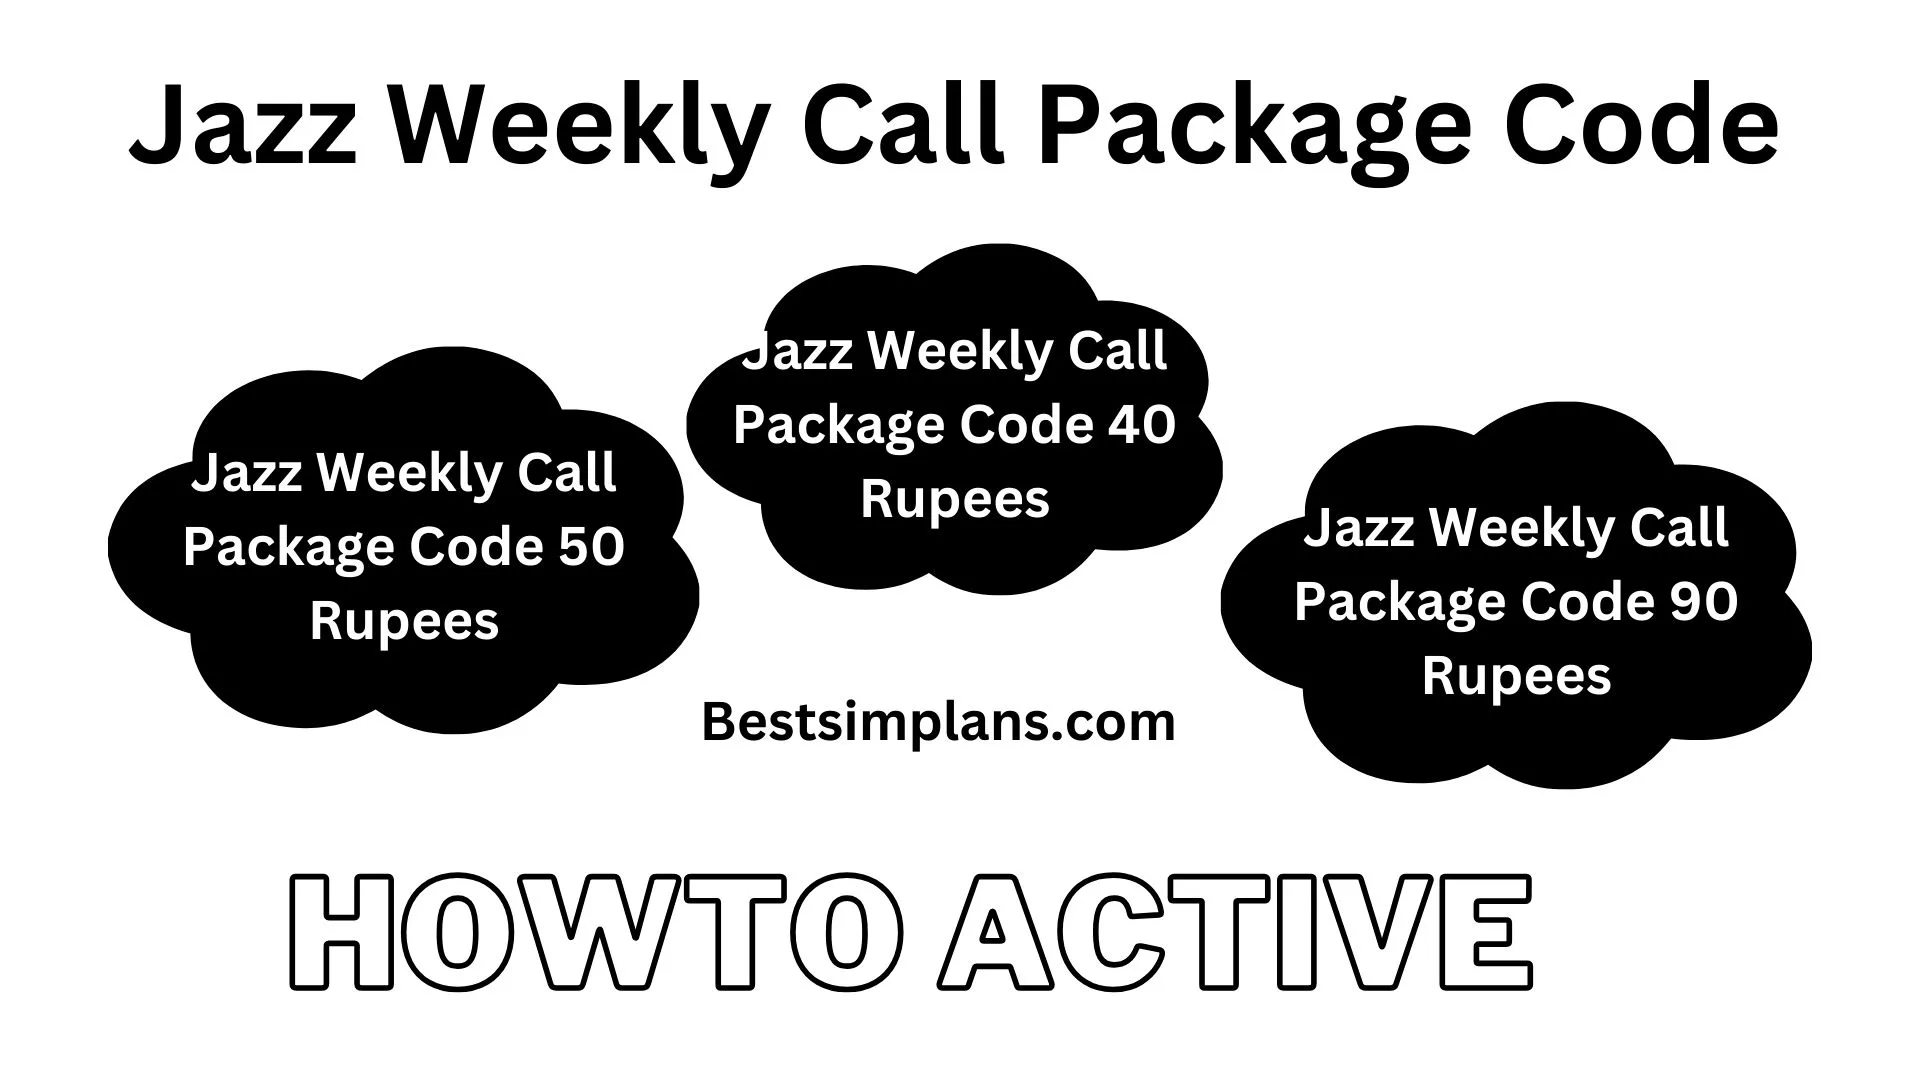 Jazz Weekly Call Package Code 50 Rupees